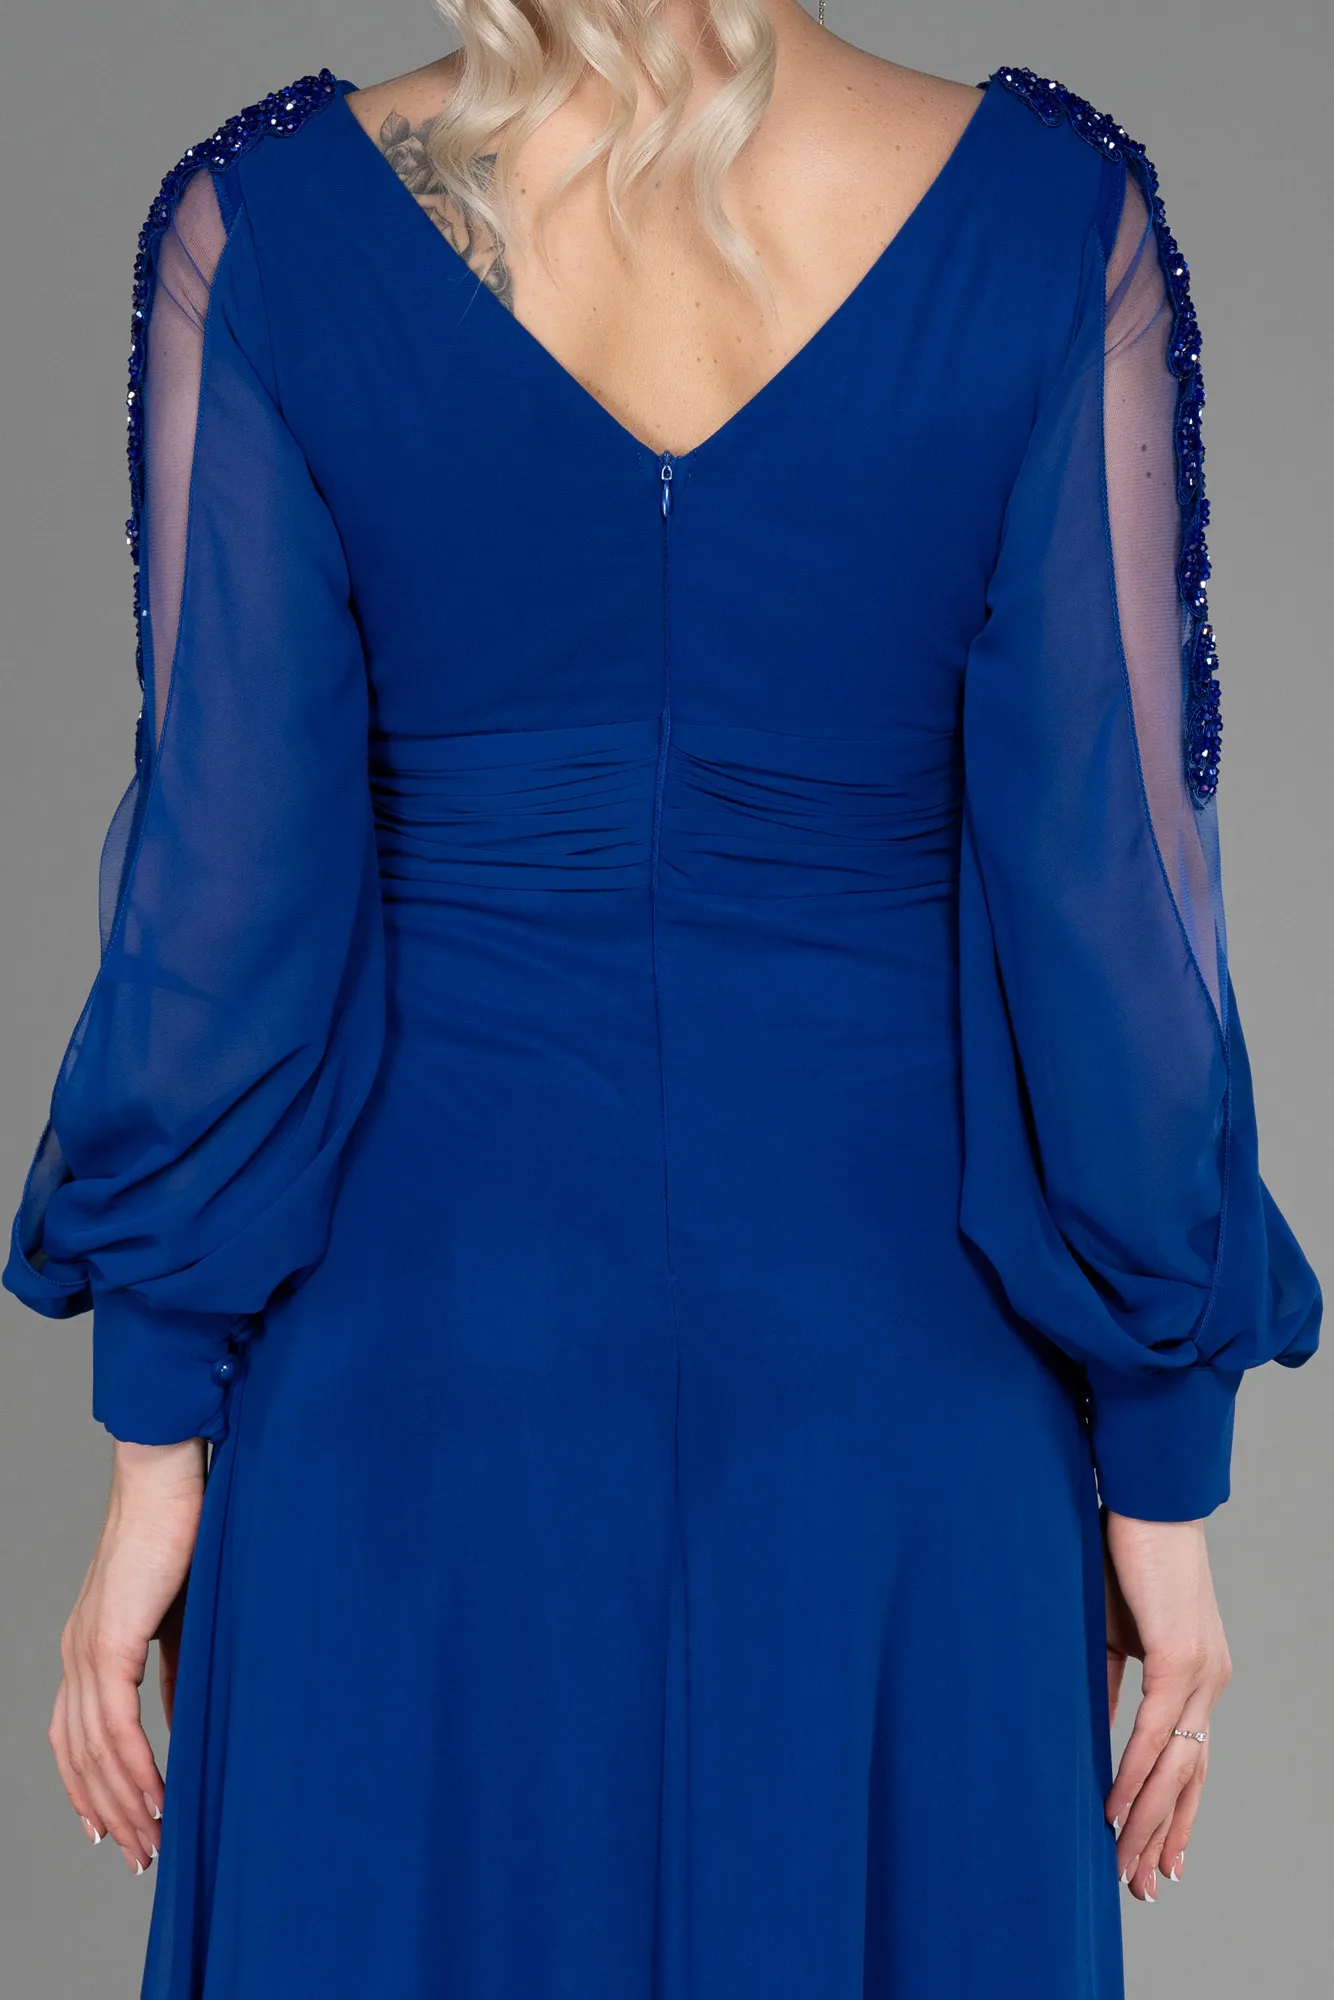 Sax Blue-Long Chiffon Evening Dress ABU3220